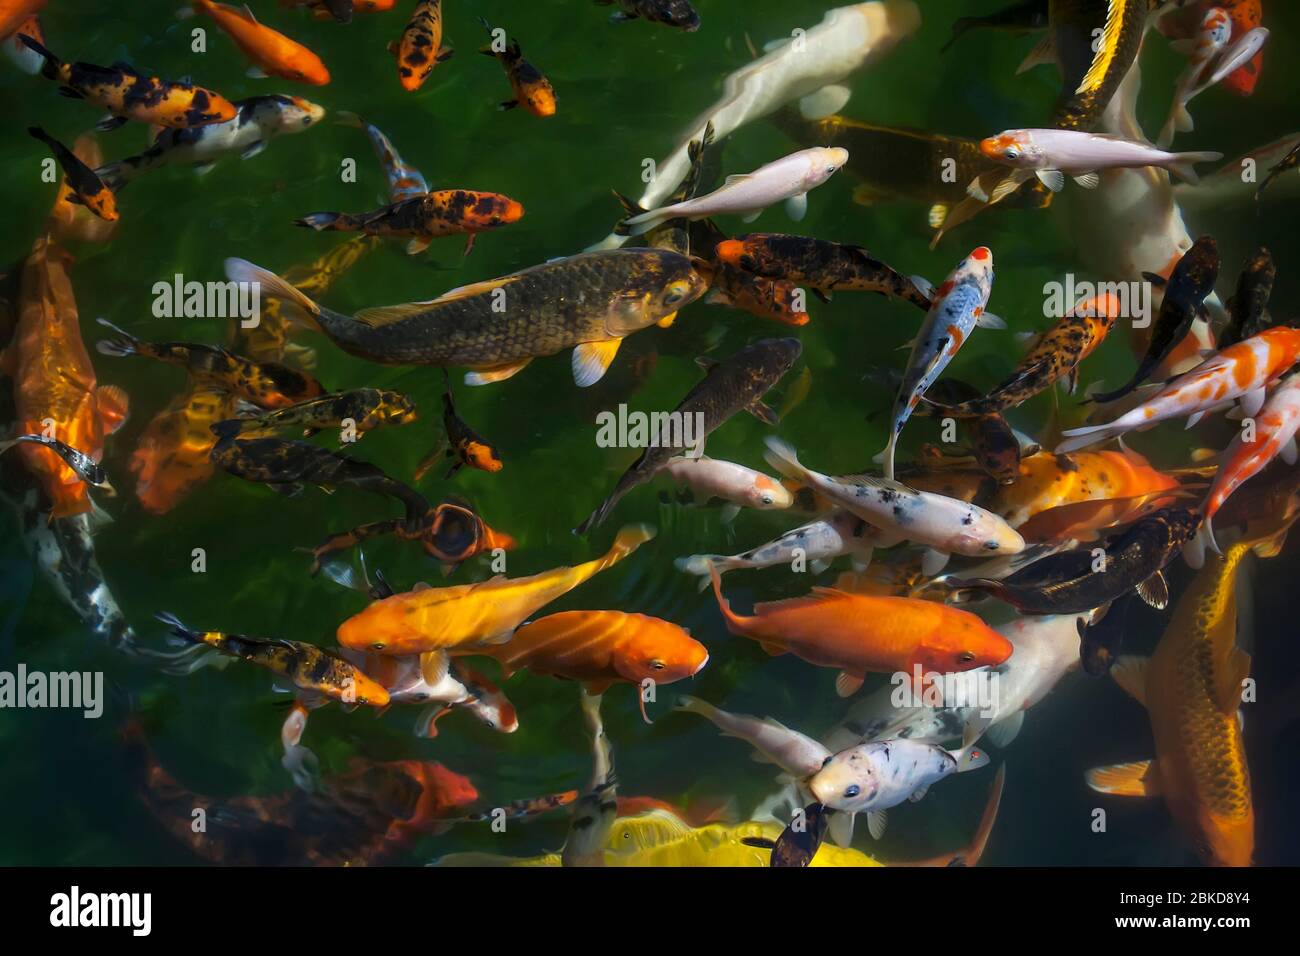 Goldfish carassius auratus hi-res stock photography and images - Alamy